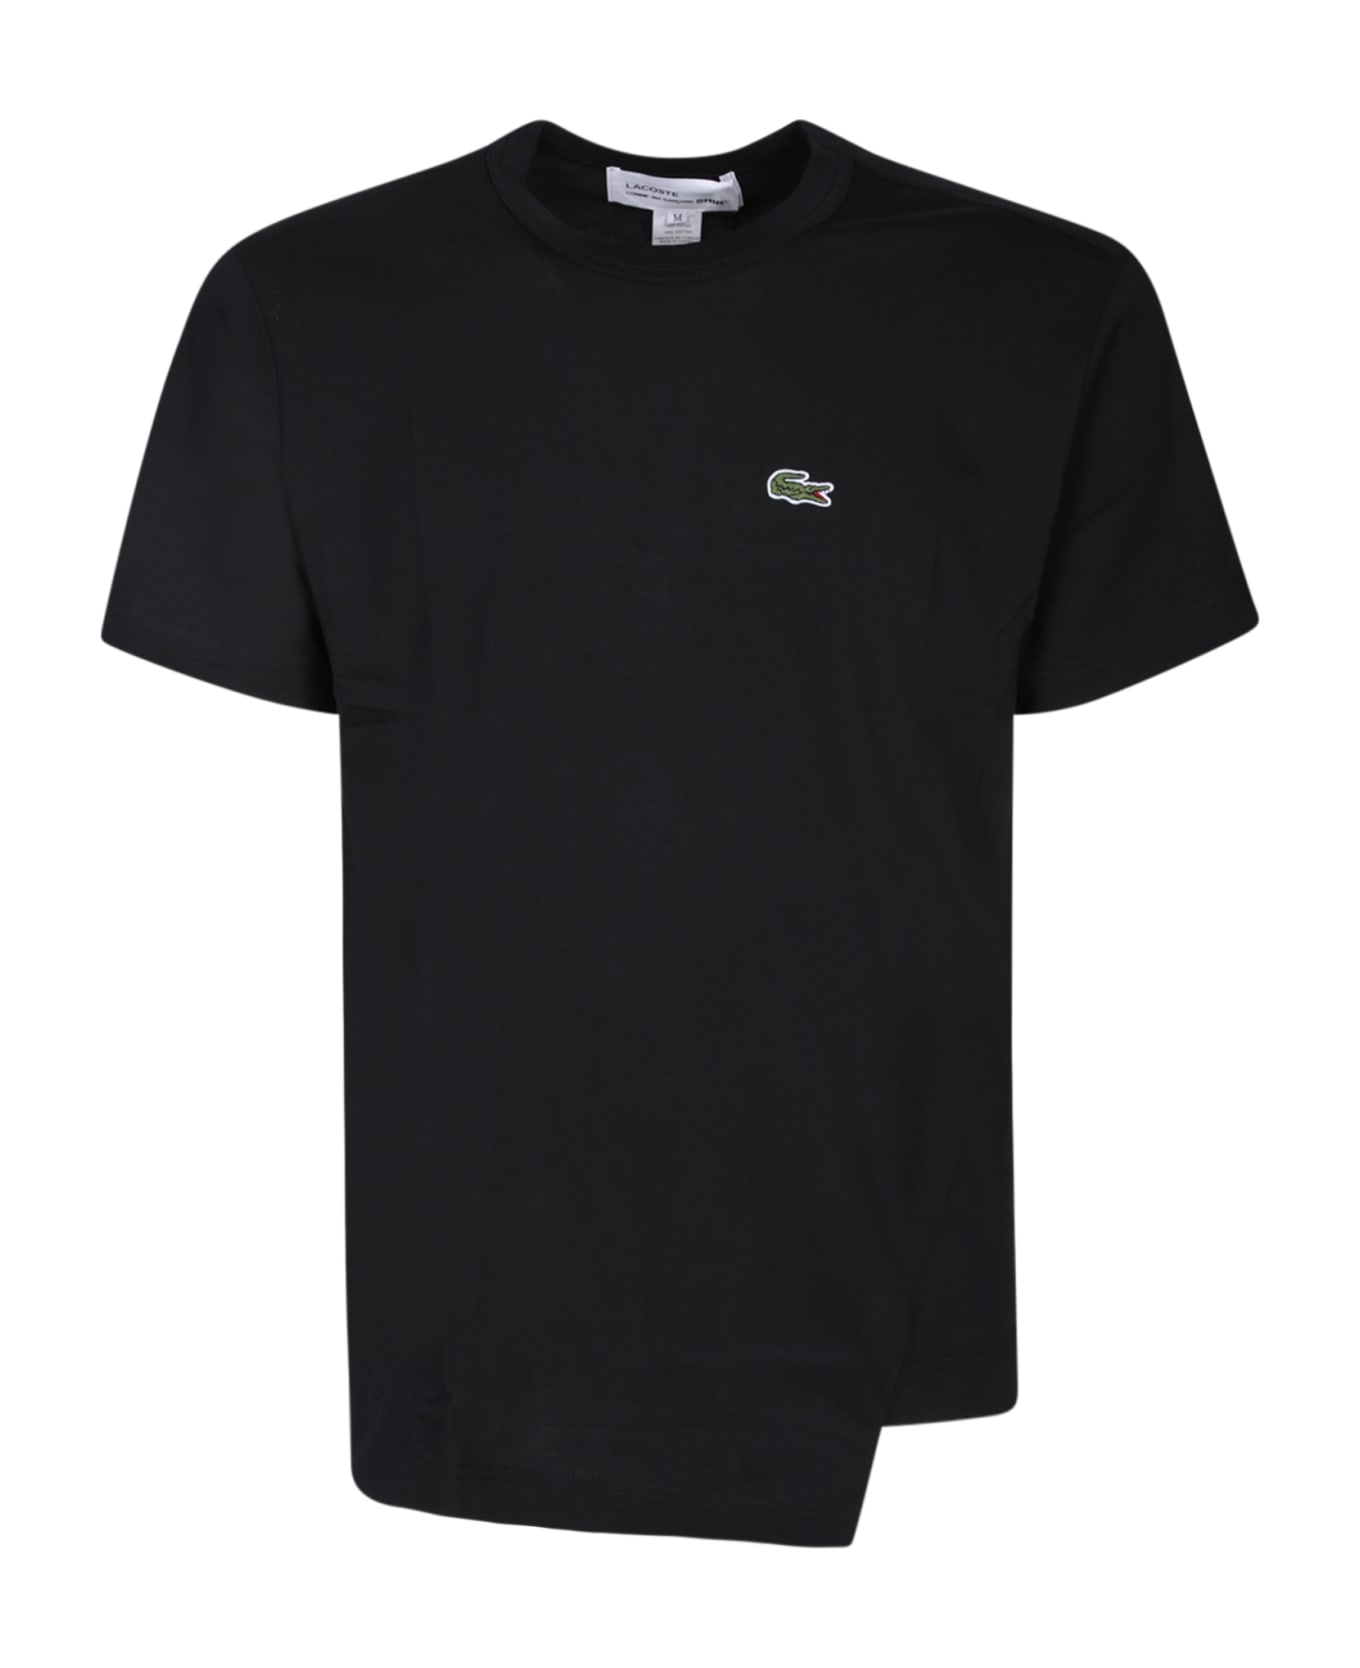 Comme des Garçons Shirt Asymmetric Black T-shirt - Black